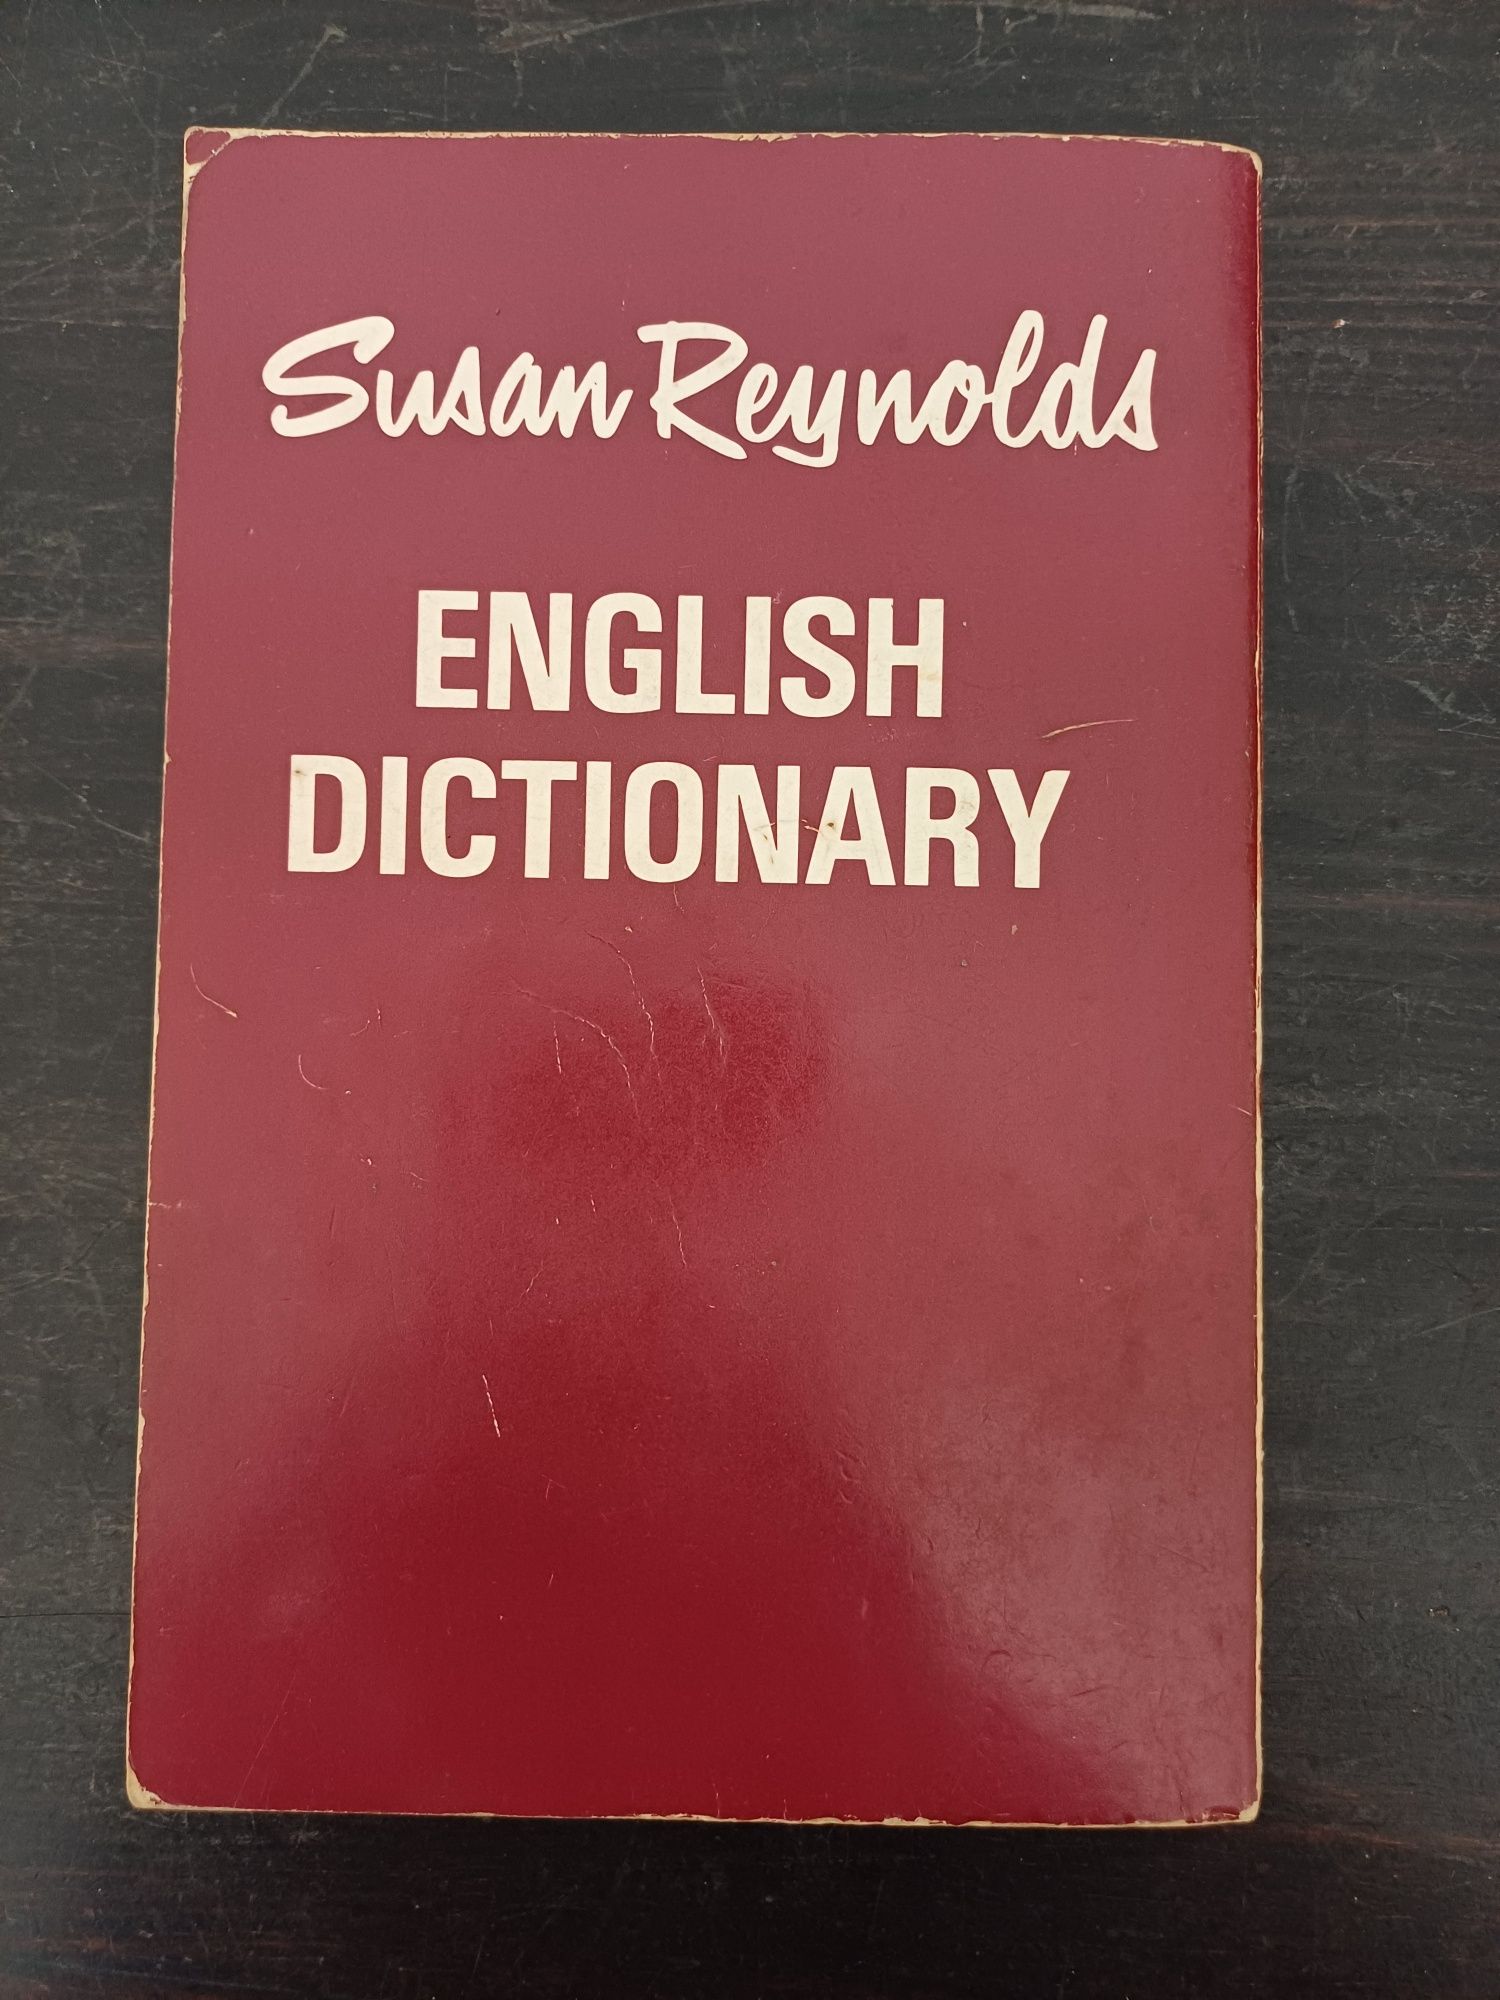 English Dictionary, Susan Reynolds